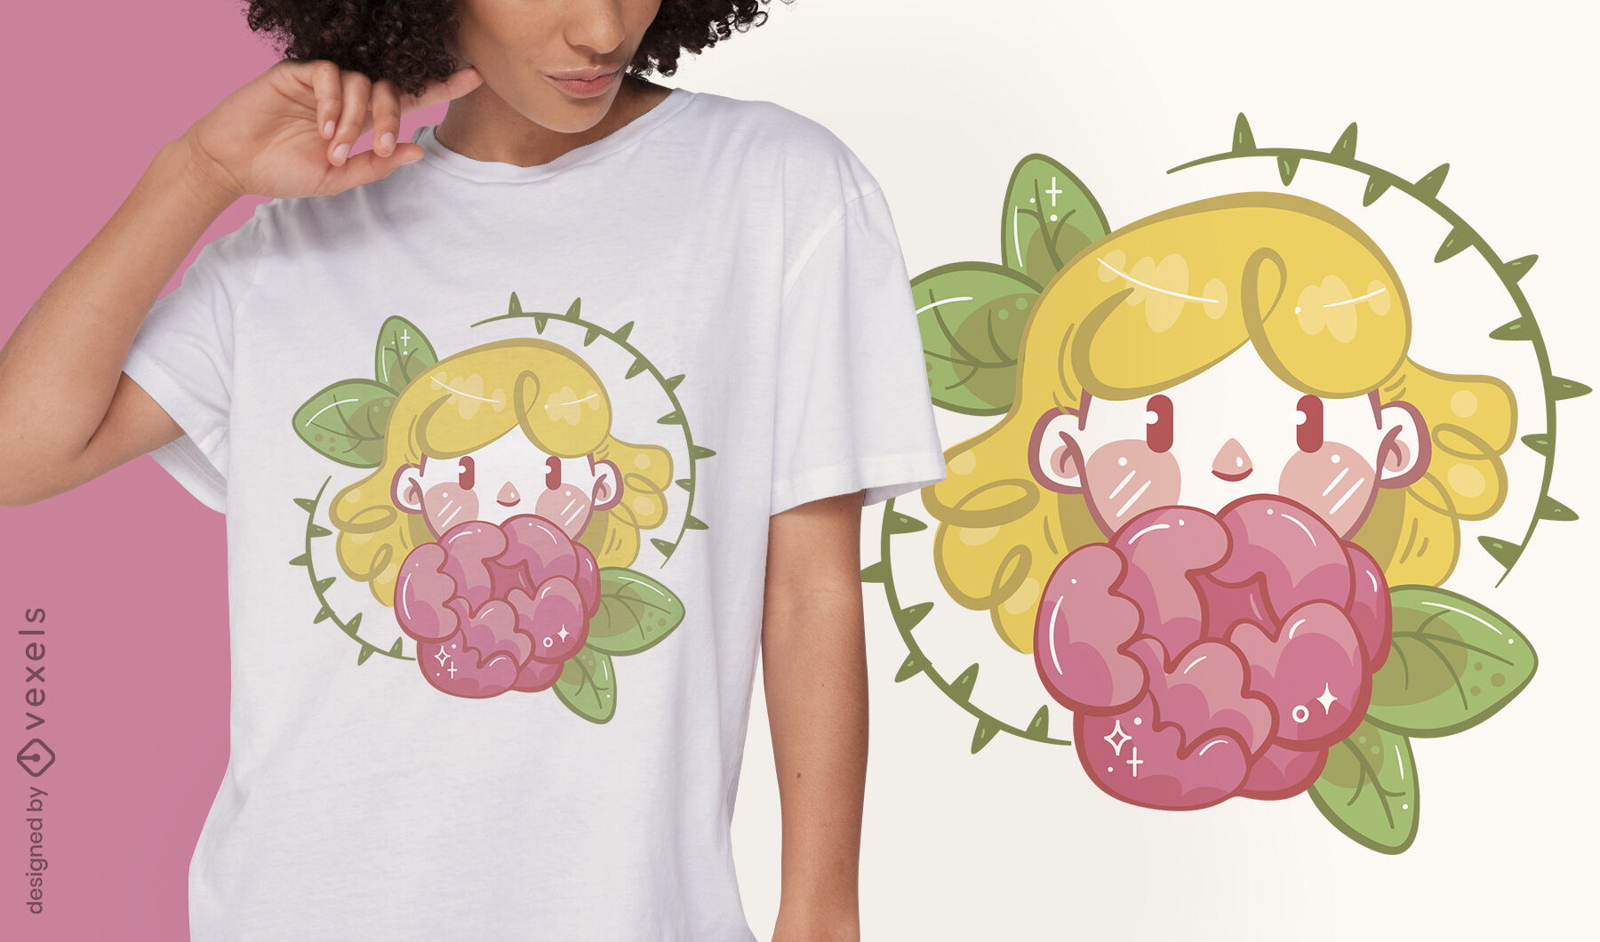 Girl with flower t-shirt design